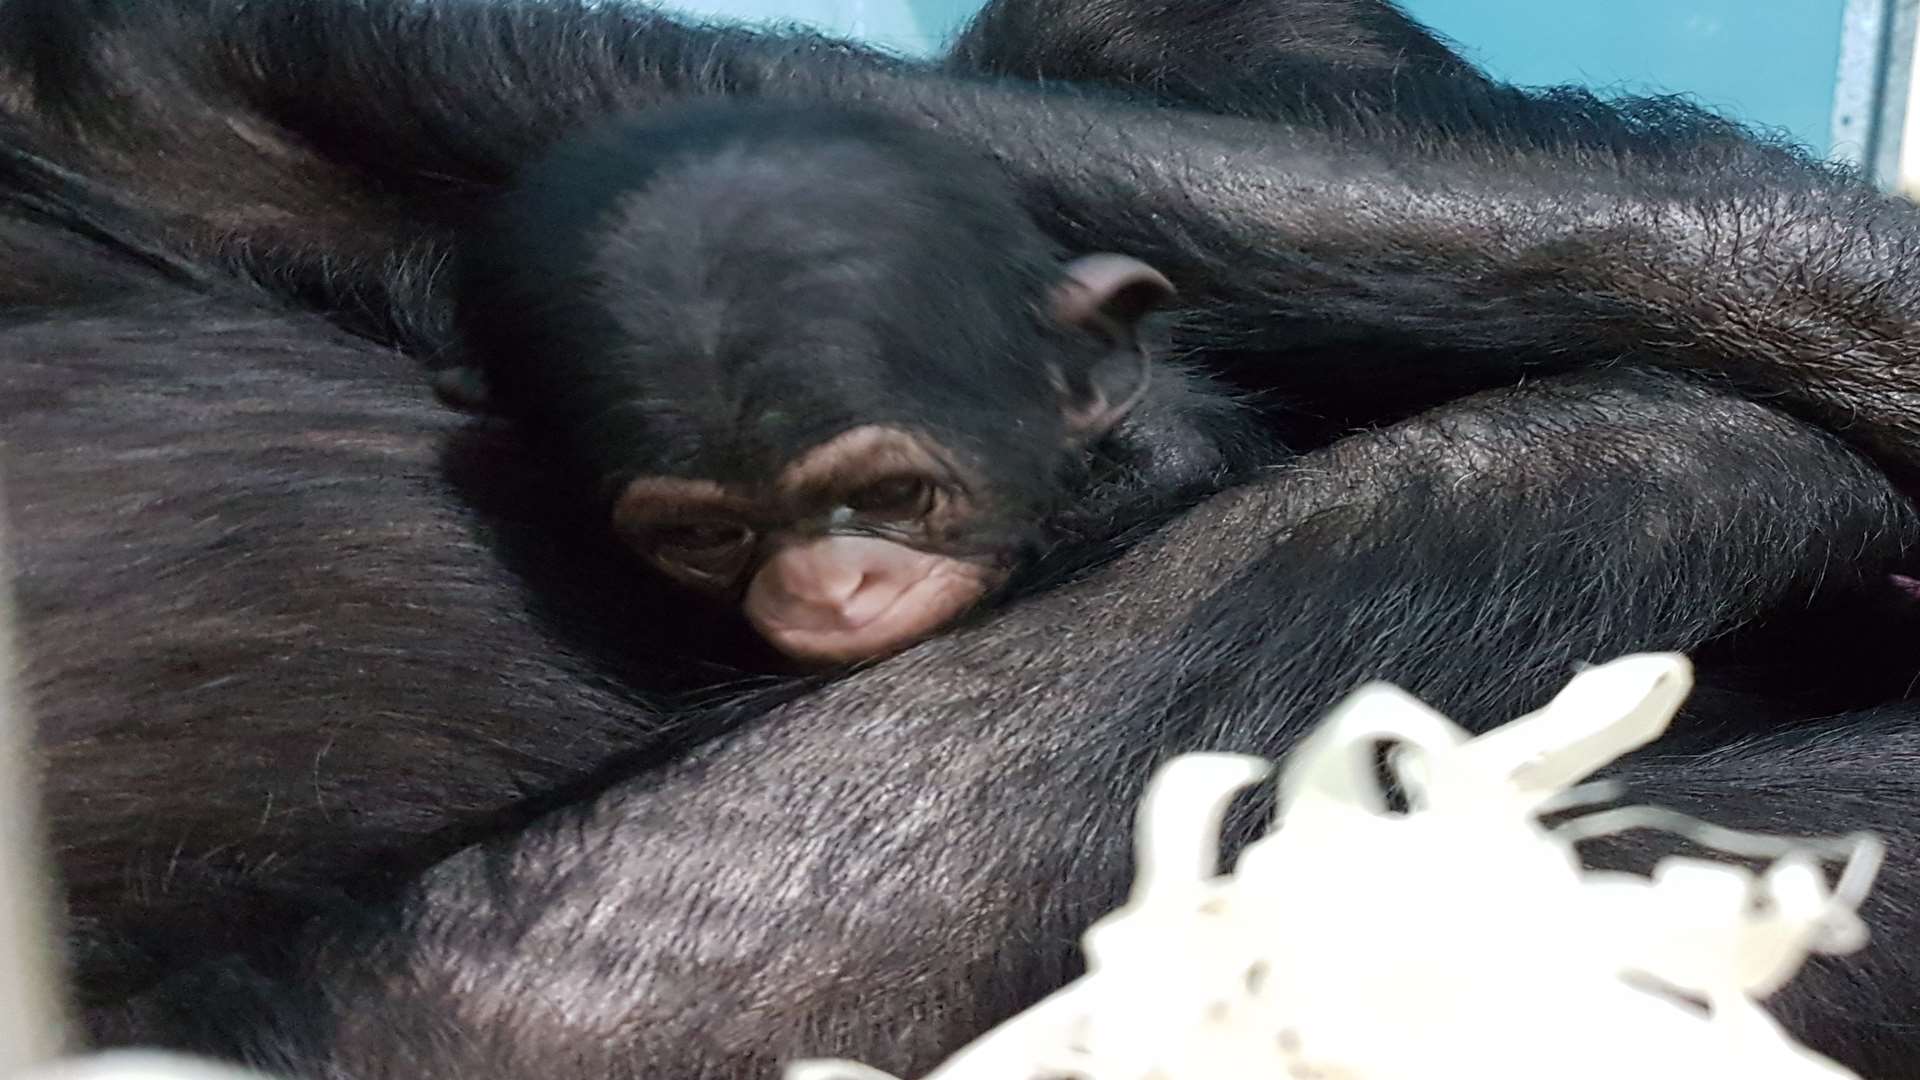 The baby chimp born at Wingham Wildlife Park